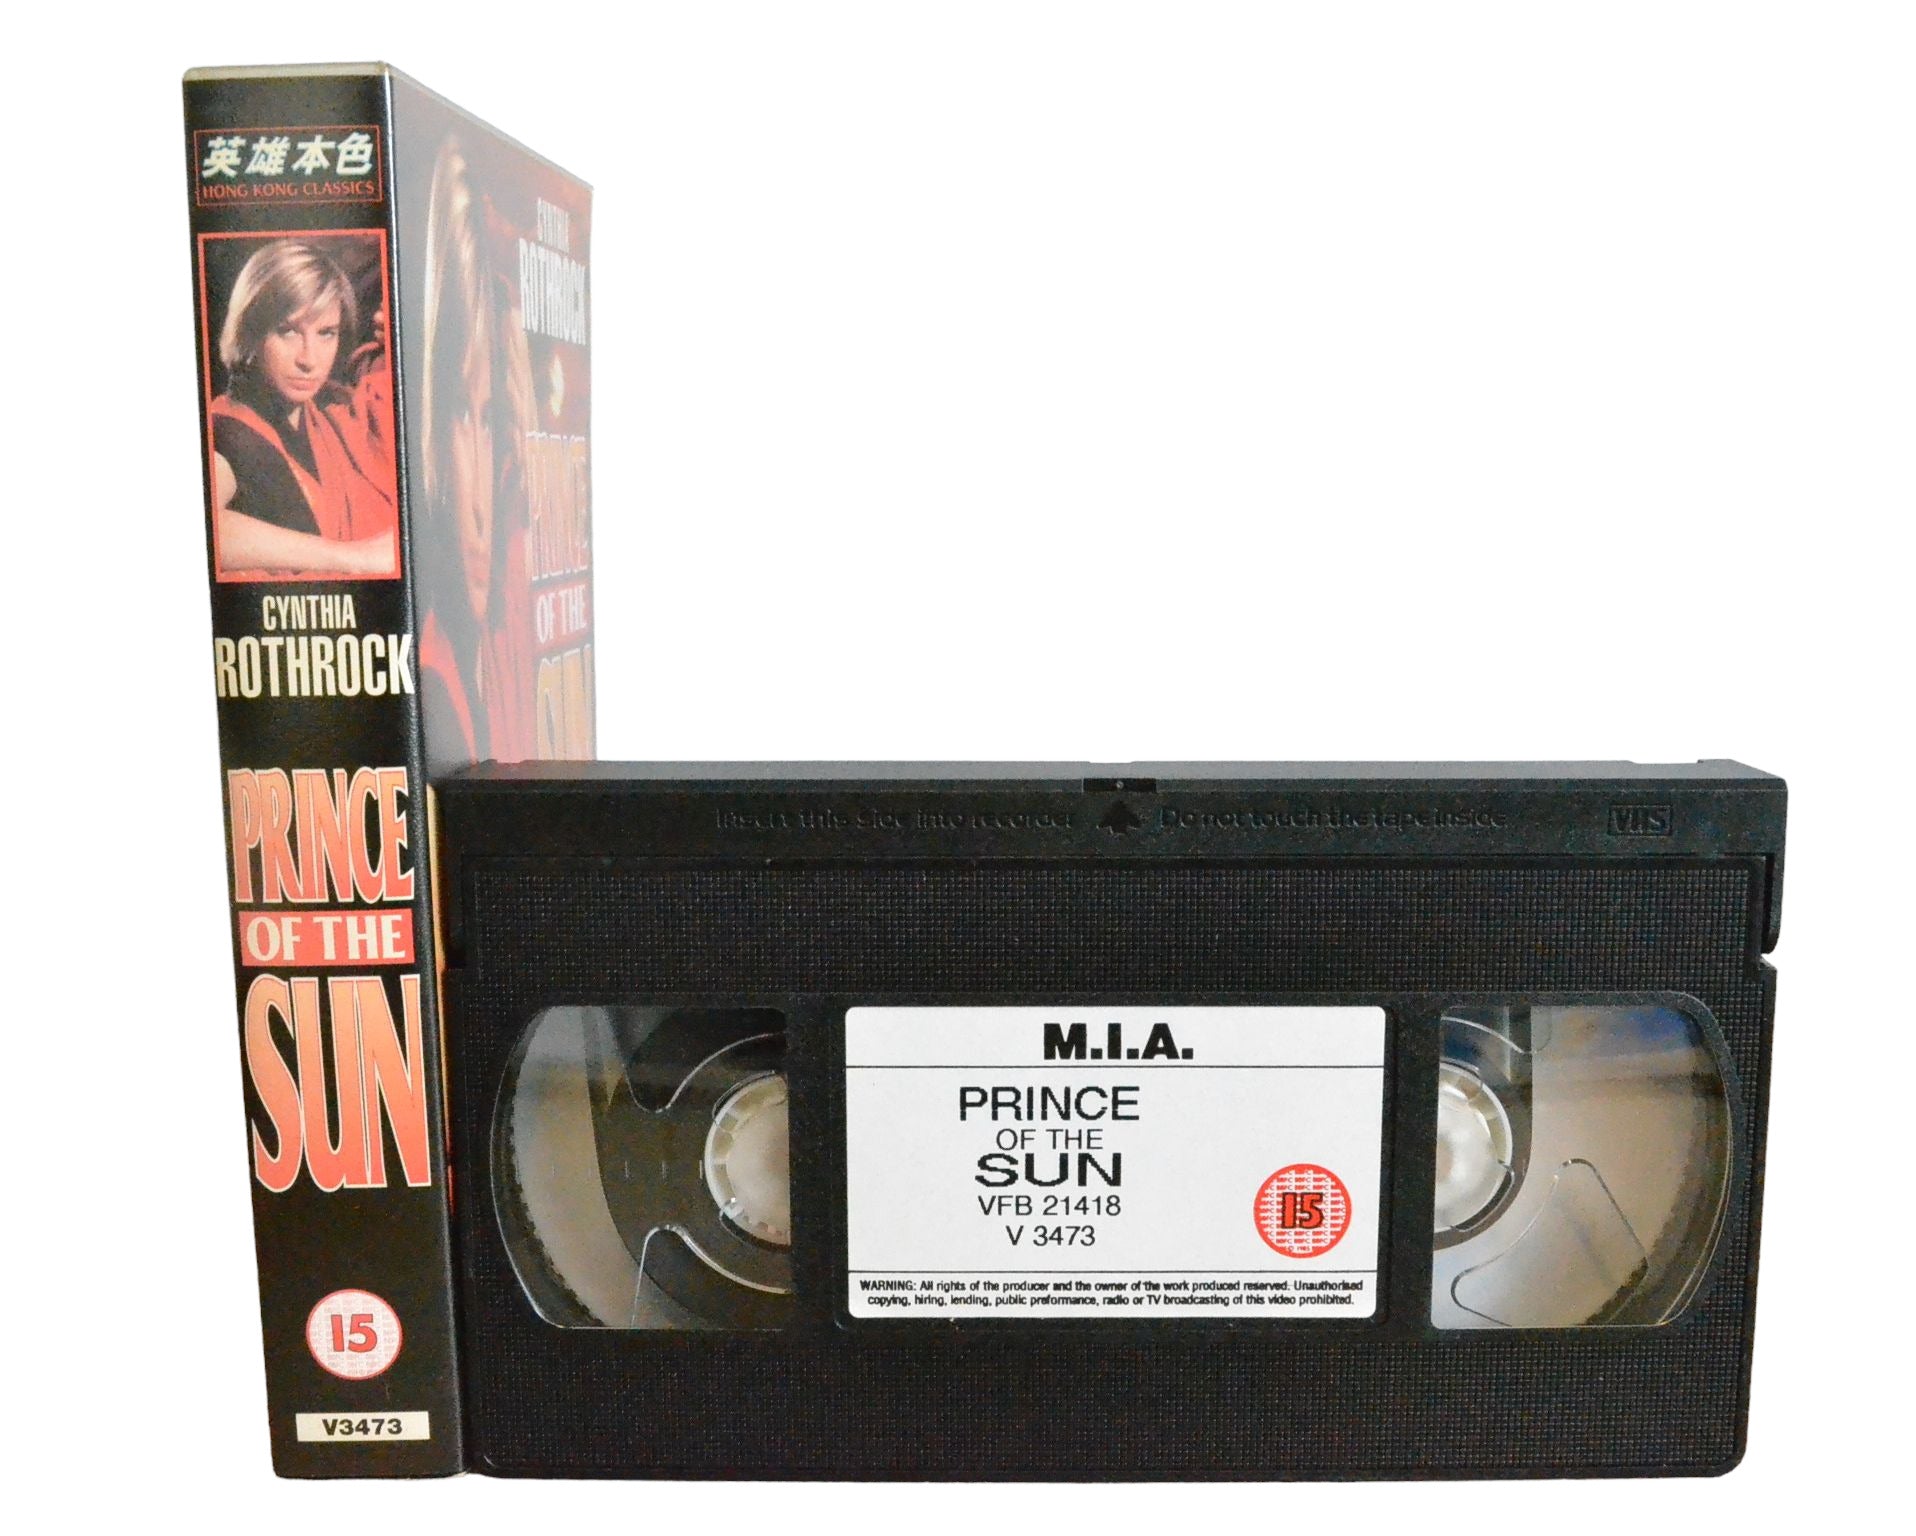 Prince Of The Sun - Cynthia Rothrock - M.I.A. Video - V3473 - Action - Pal - VHS-